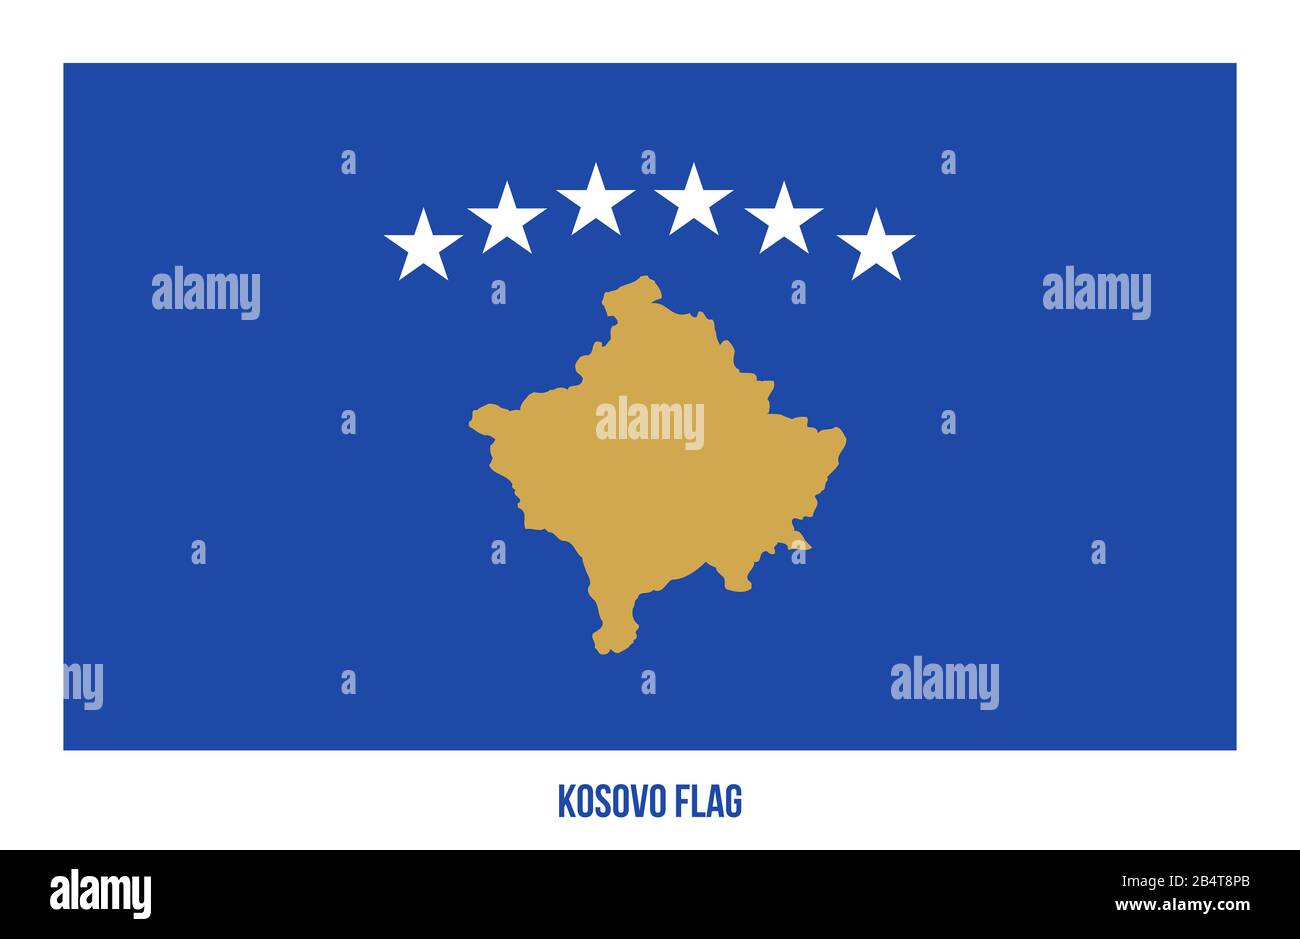 Kosovo Flag Vector Illustration on White Background. Kosovo National Flag. Stock Photo